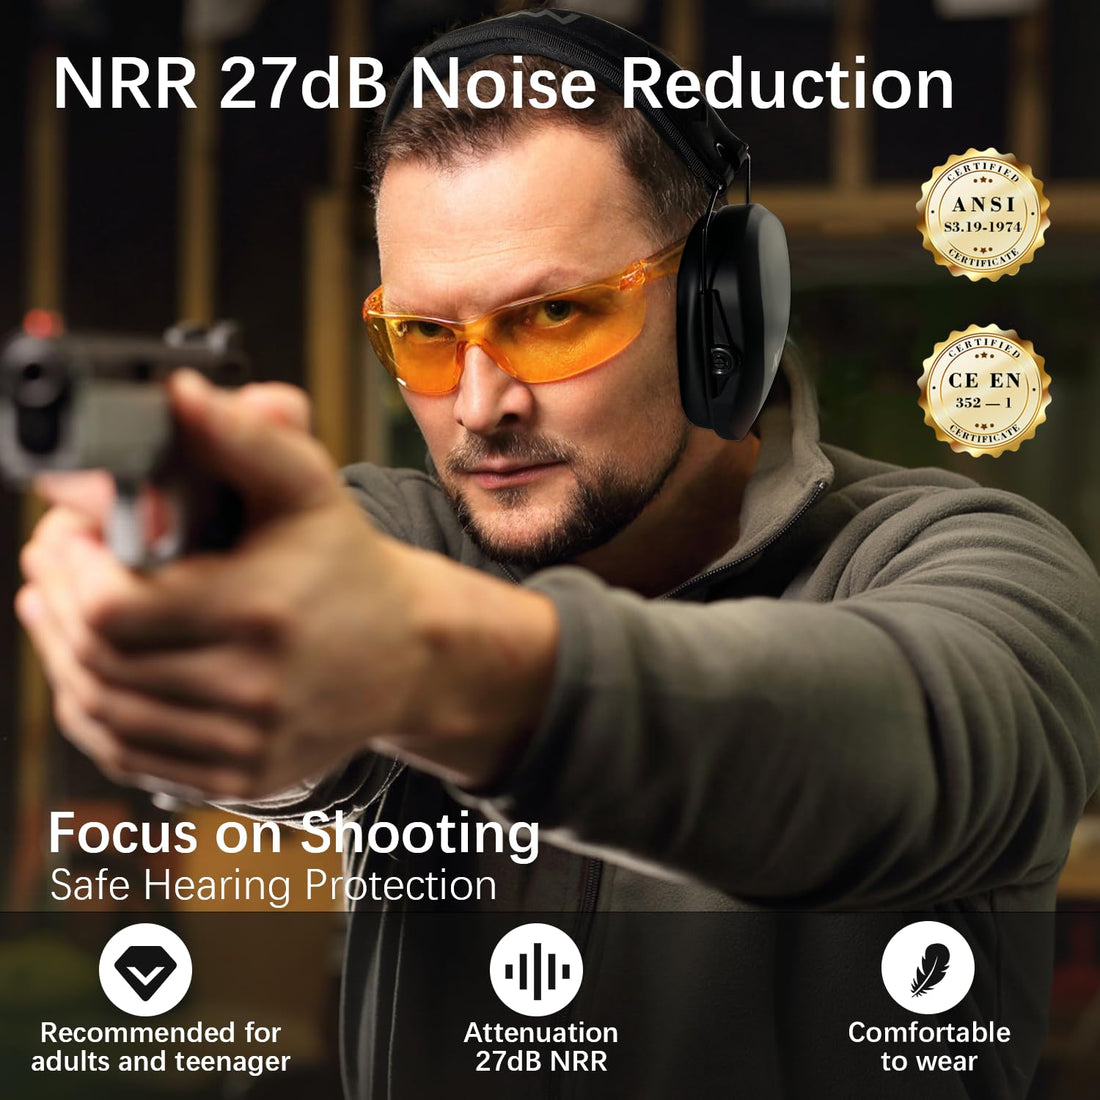 KAYNN 018 Shooting Range Ear Protection NRR 27dB, Adjustable Compact Noise Reducing Hearing Protection,Slim Shooting Earmuffs